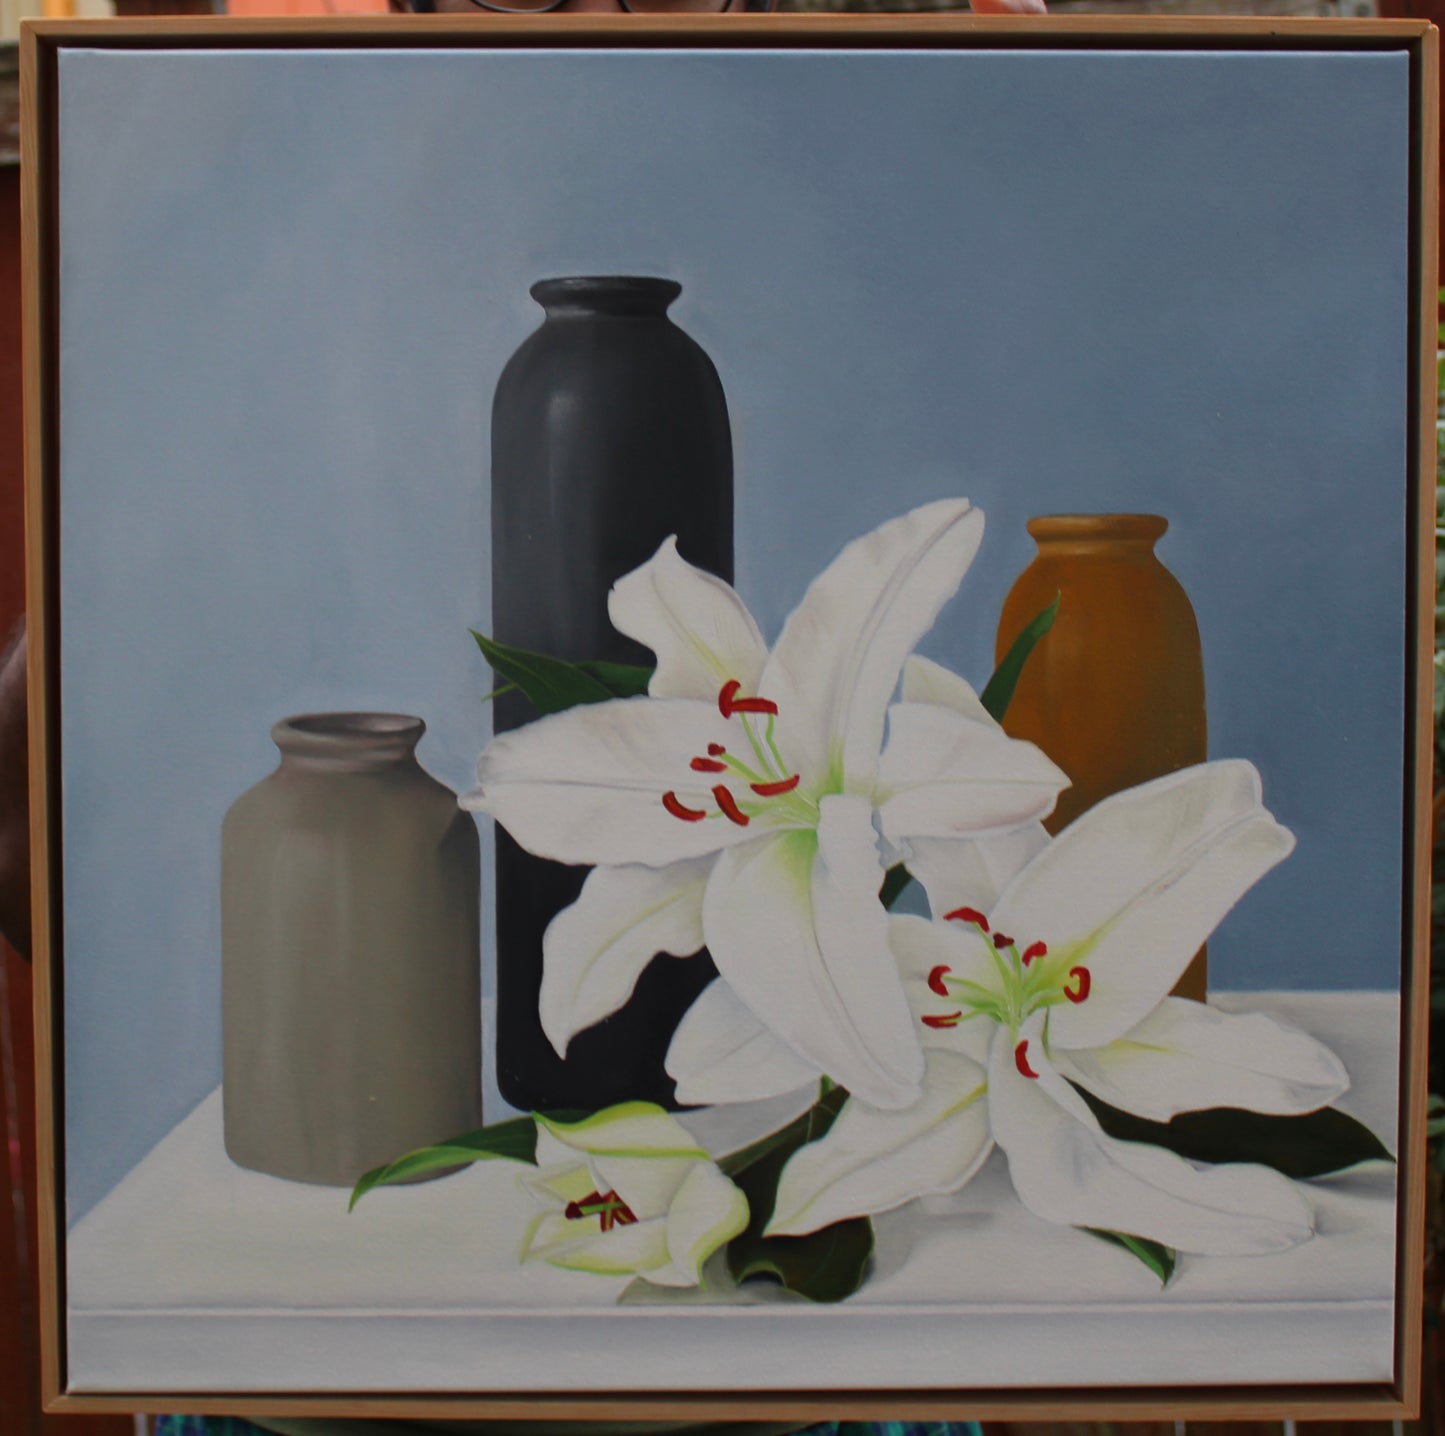 Lilies on Ceramic vase -Original Oil Painting by Shobika